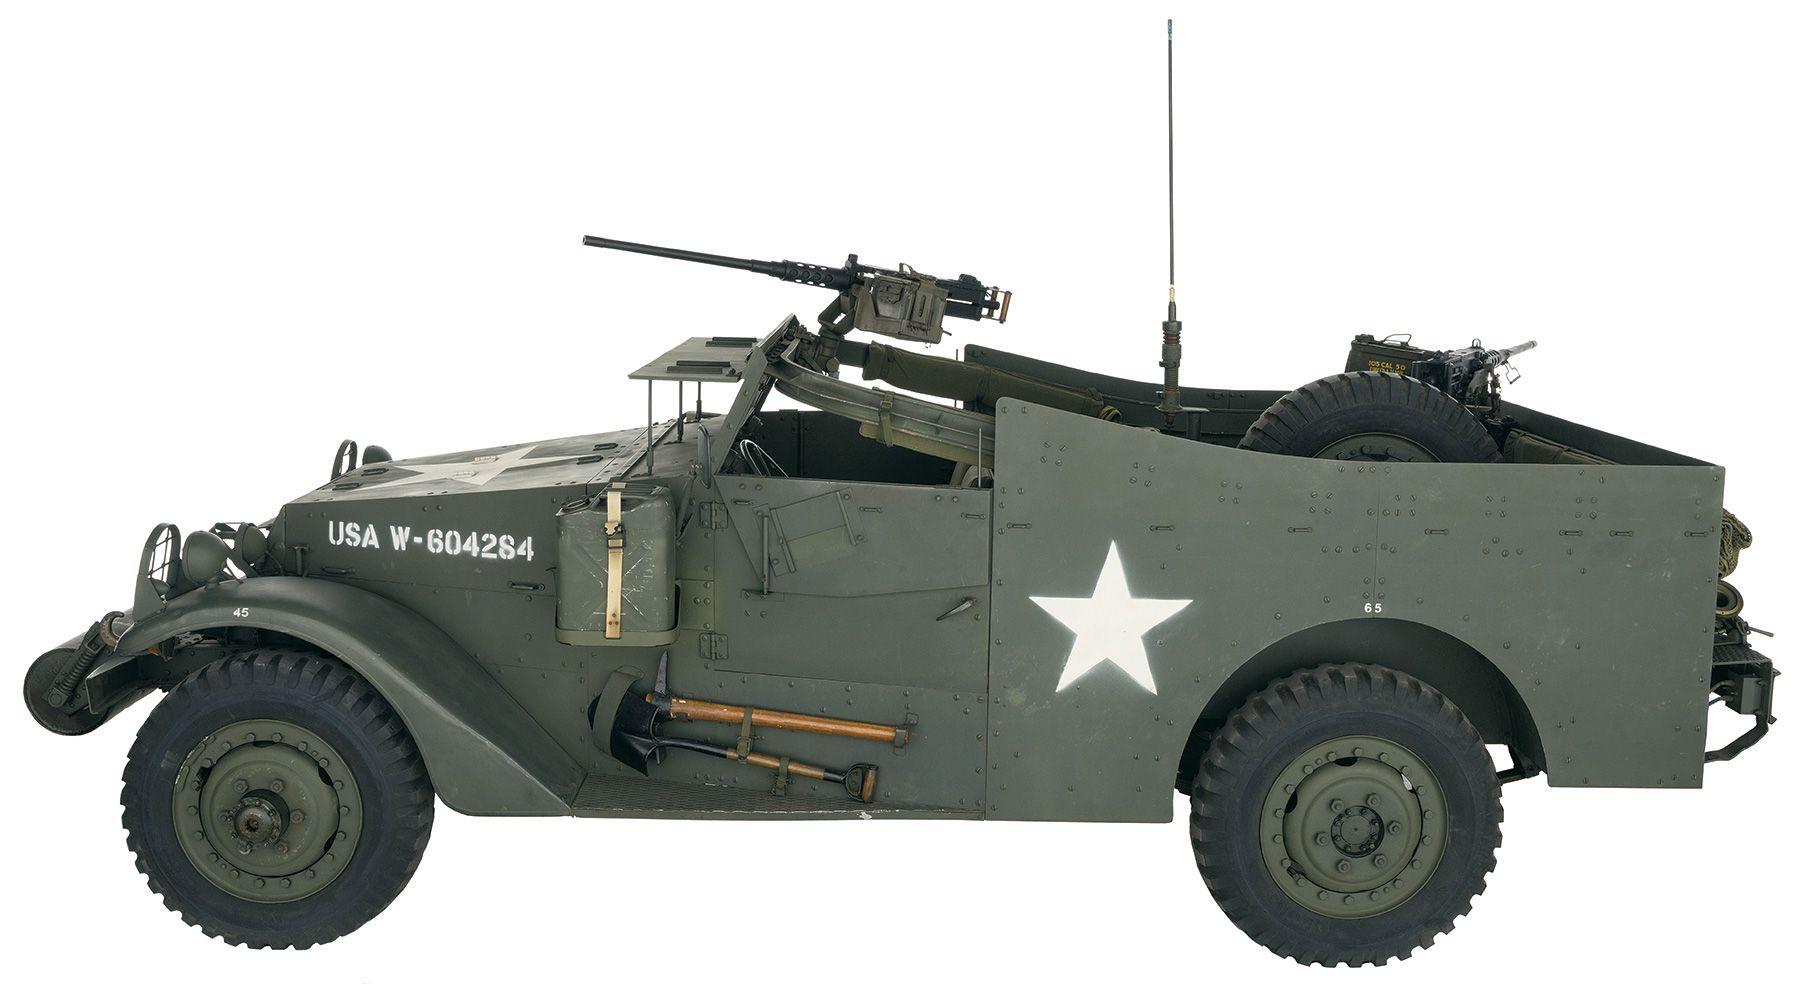 Outstanding and Impressive World War II U.S. M3A1 Scout Car